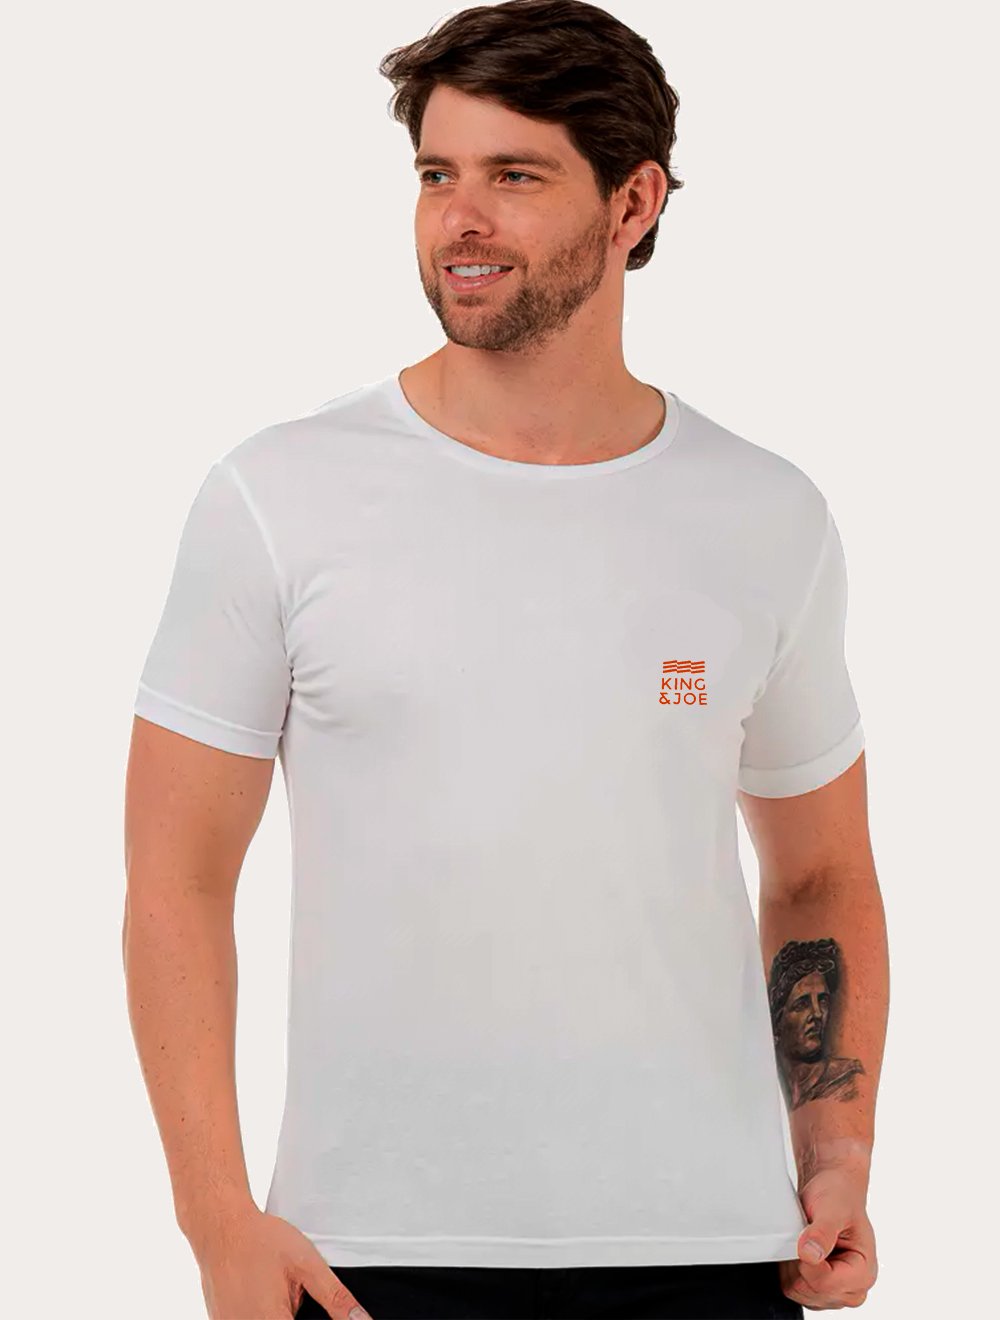 Camiseta King & Joe Masculina Slim Bandeira Costas Off-White